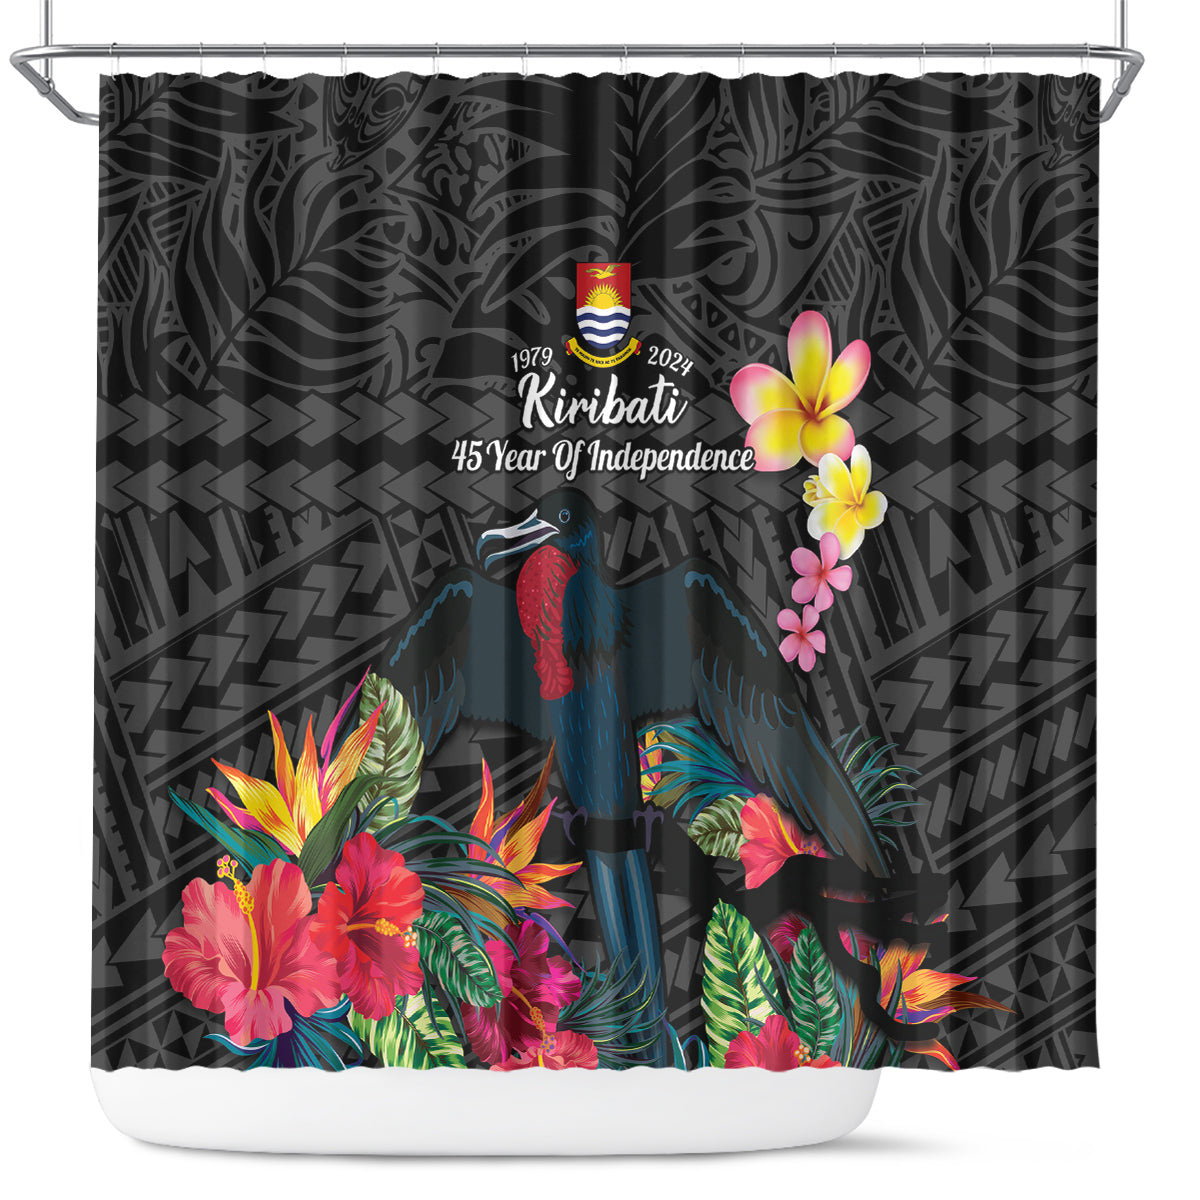 Kiribati Independence Day Shower Curtain Frigatebird Mix Tropical Flowers - Black Style